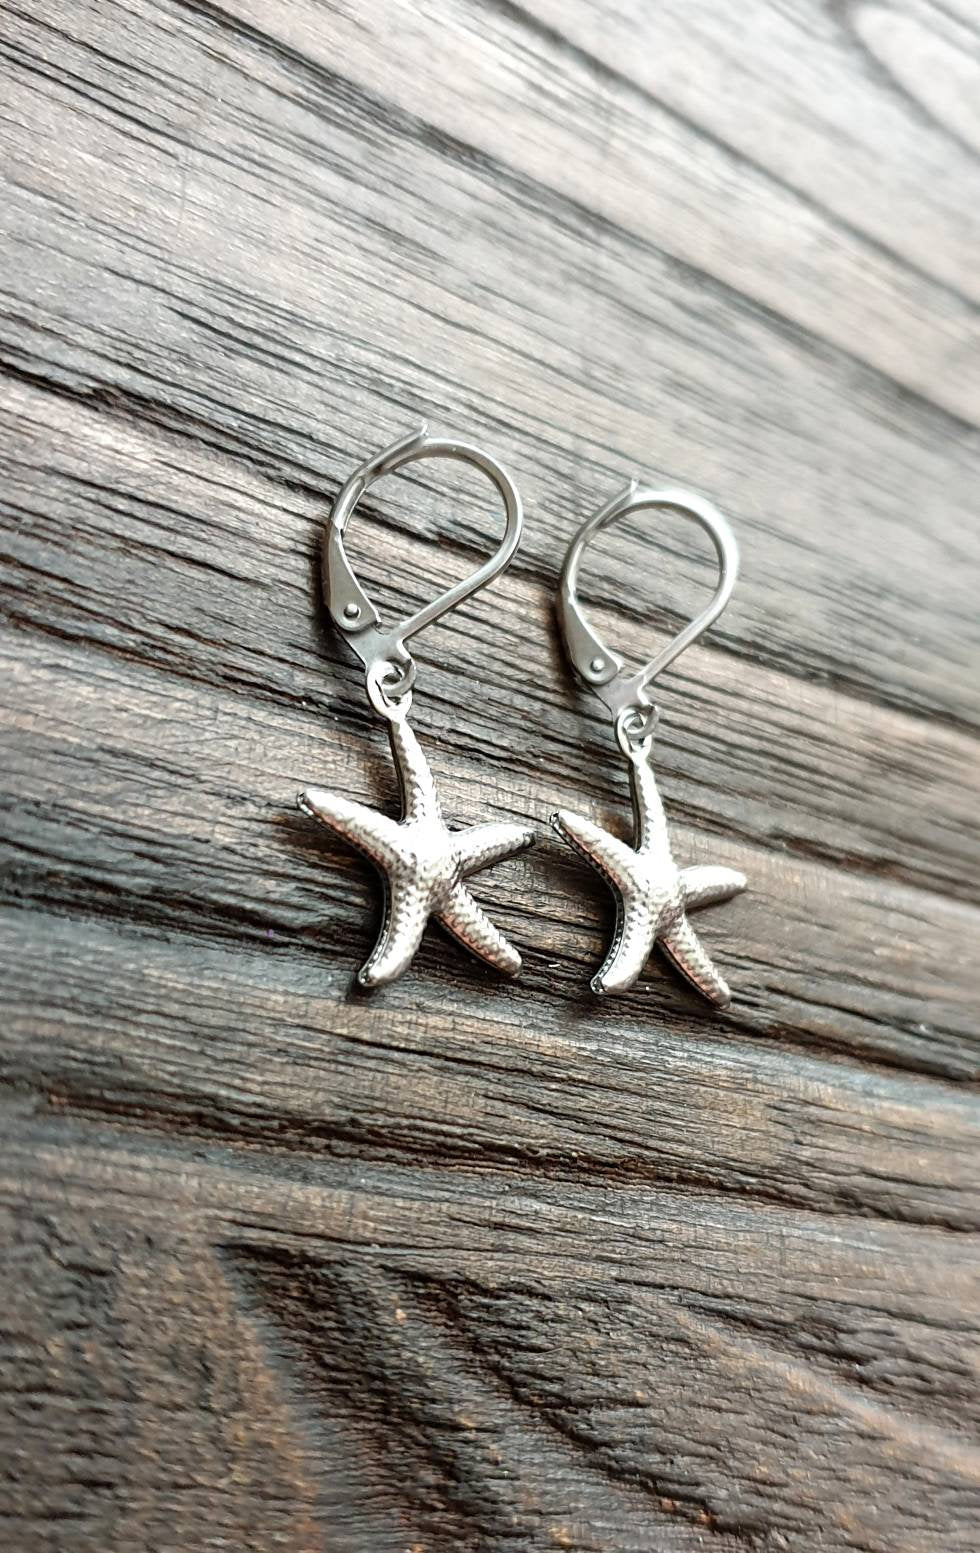 Starfish Leverback Earrings, Stainless Steel Dangle Leverback or Hook Earrings.